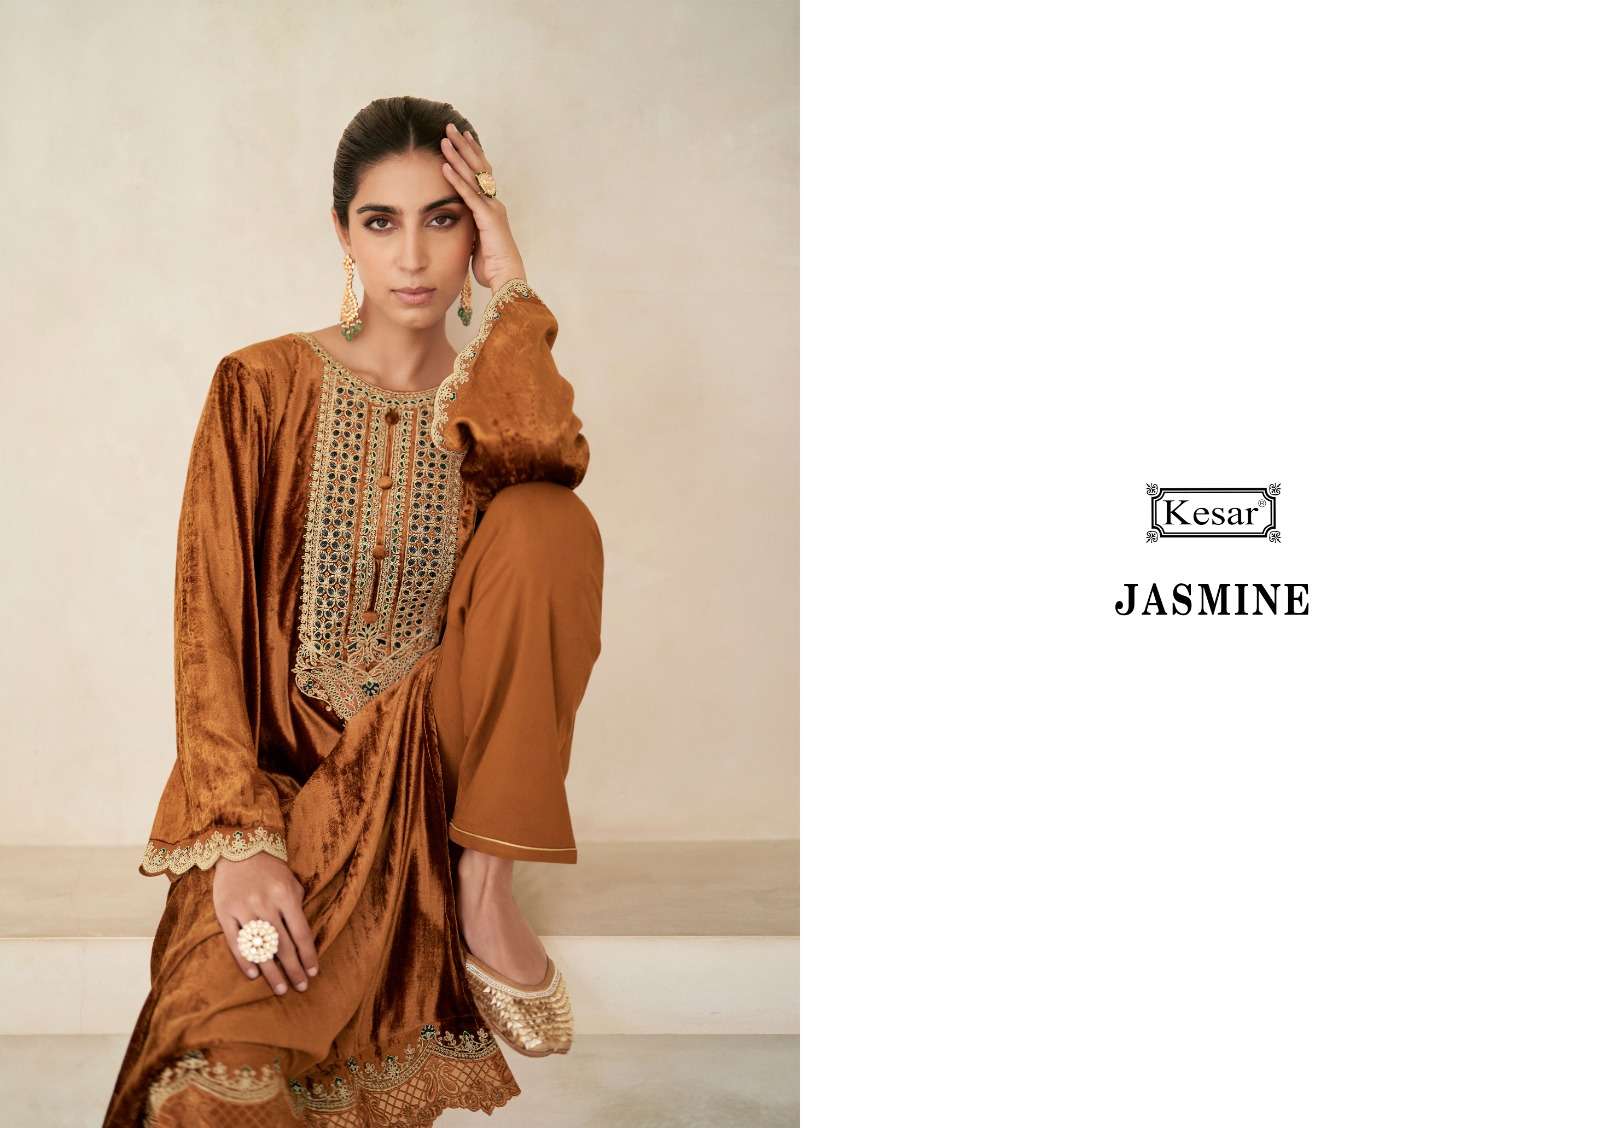 kesar jasmine 90001-90003 series latest pakistani fancy salwar kameez wholesaler surat gujarat